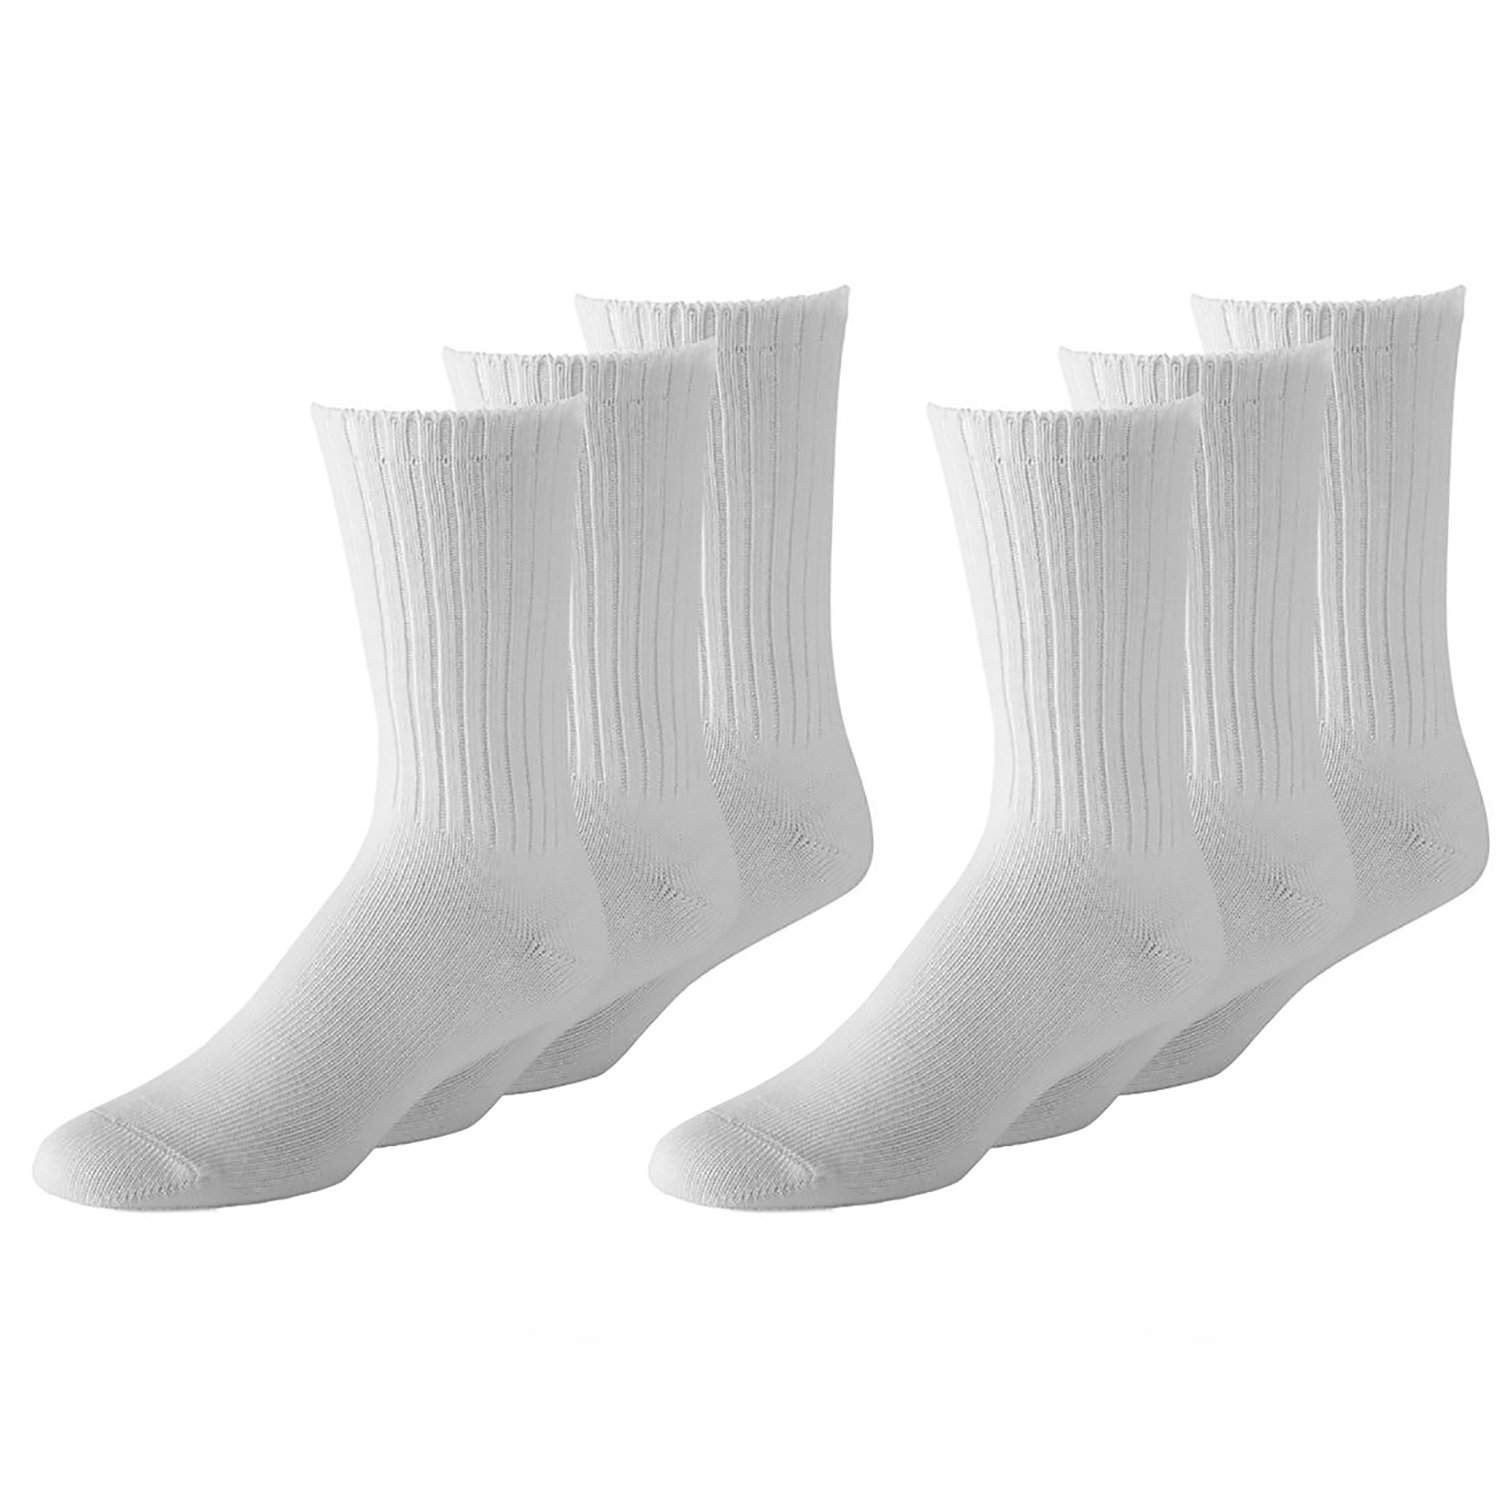 50 Pairs Women's Athletic Crew Socks - Bulk Wholesale Packs - Any Shoe Size